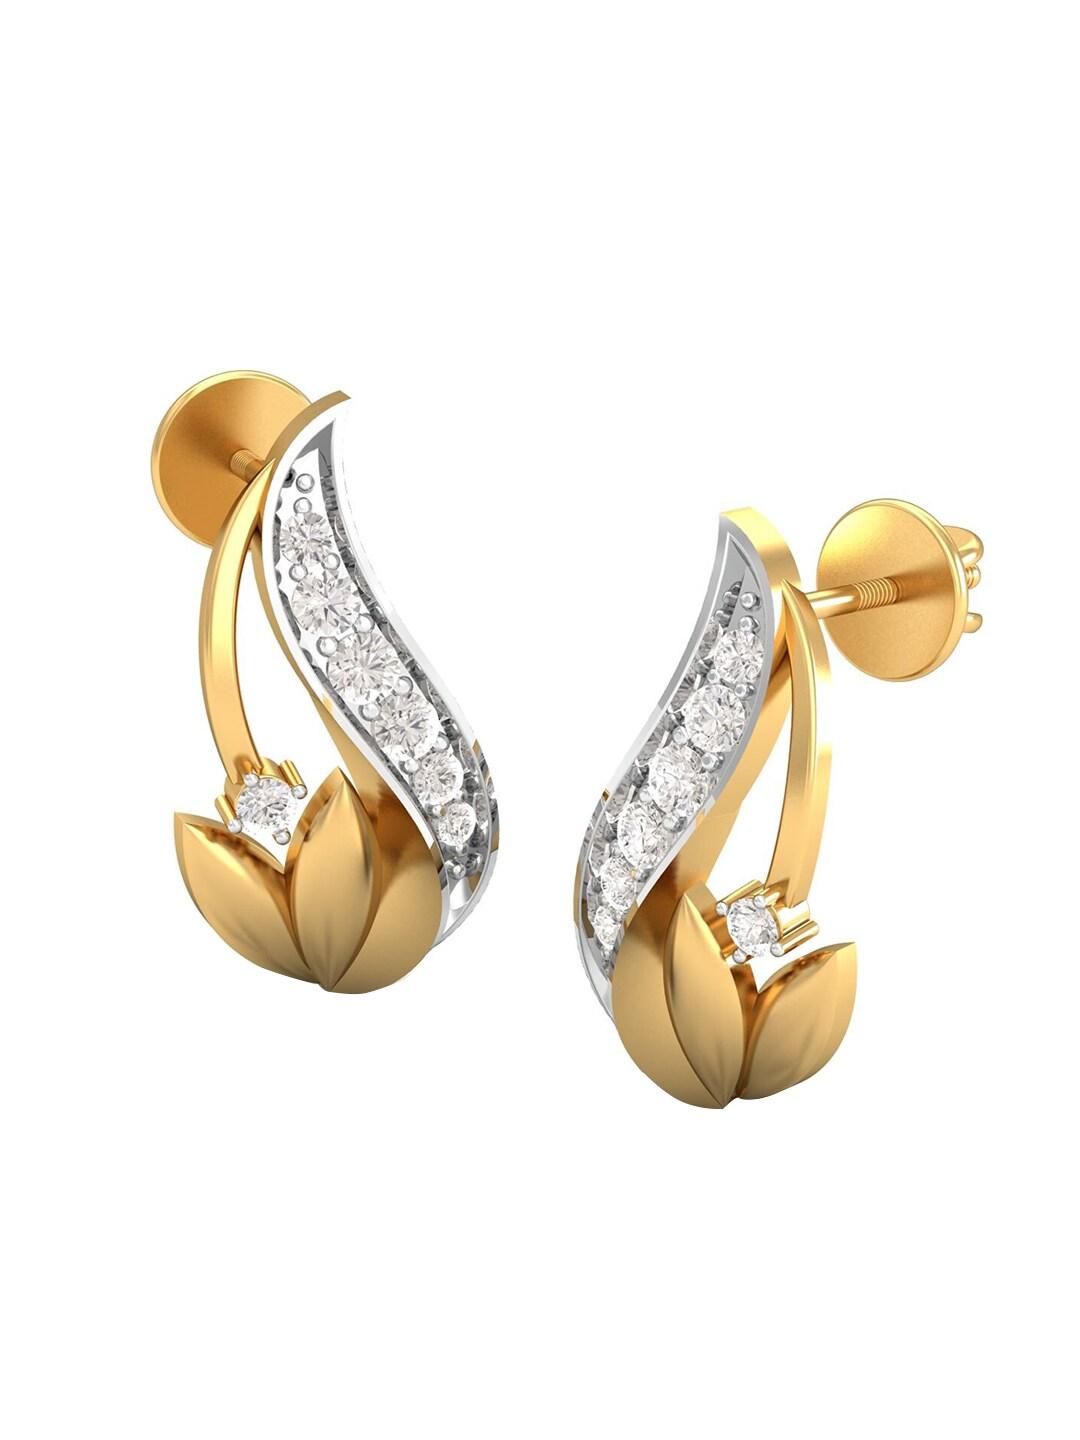 KUBERBOX Royal Swan 18KT Gold Diamond-Studded Earrings-2.28gm